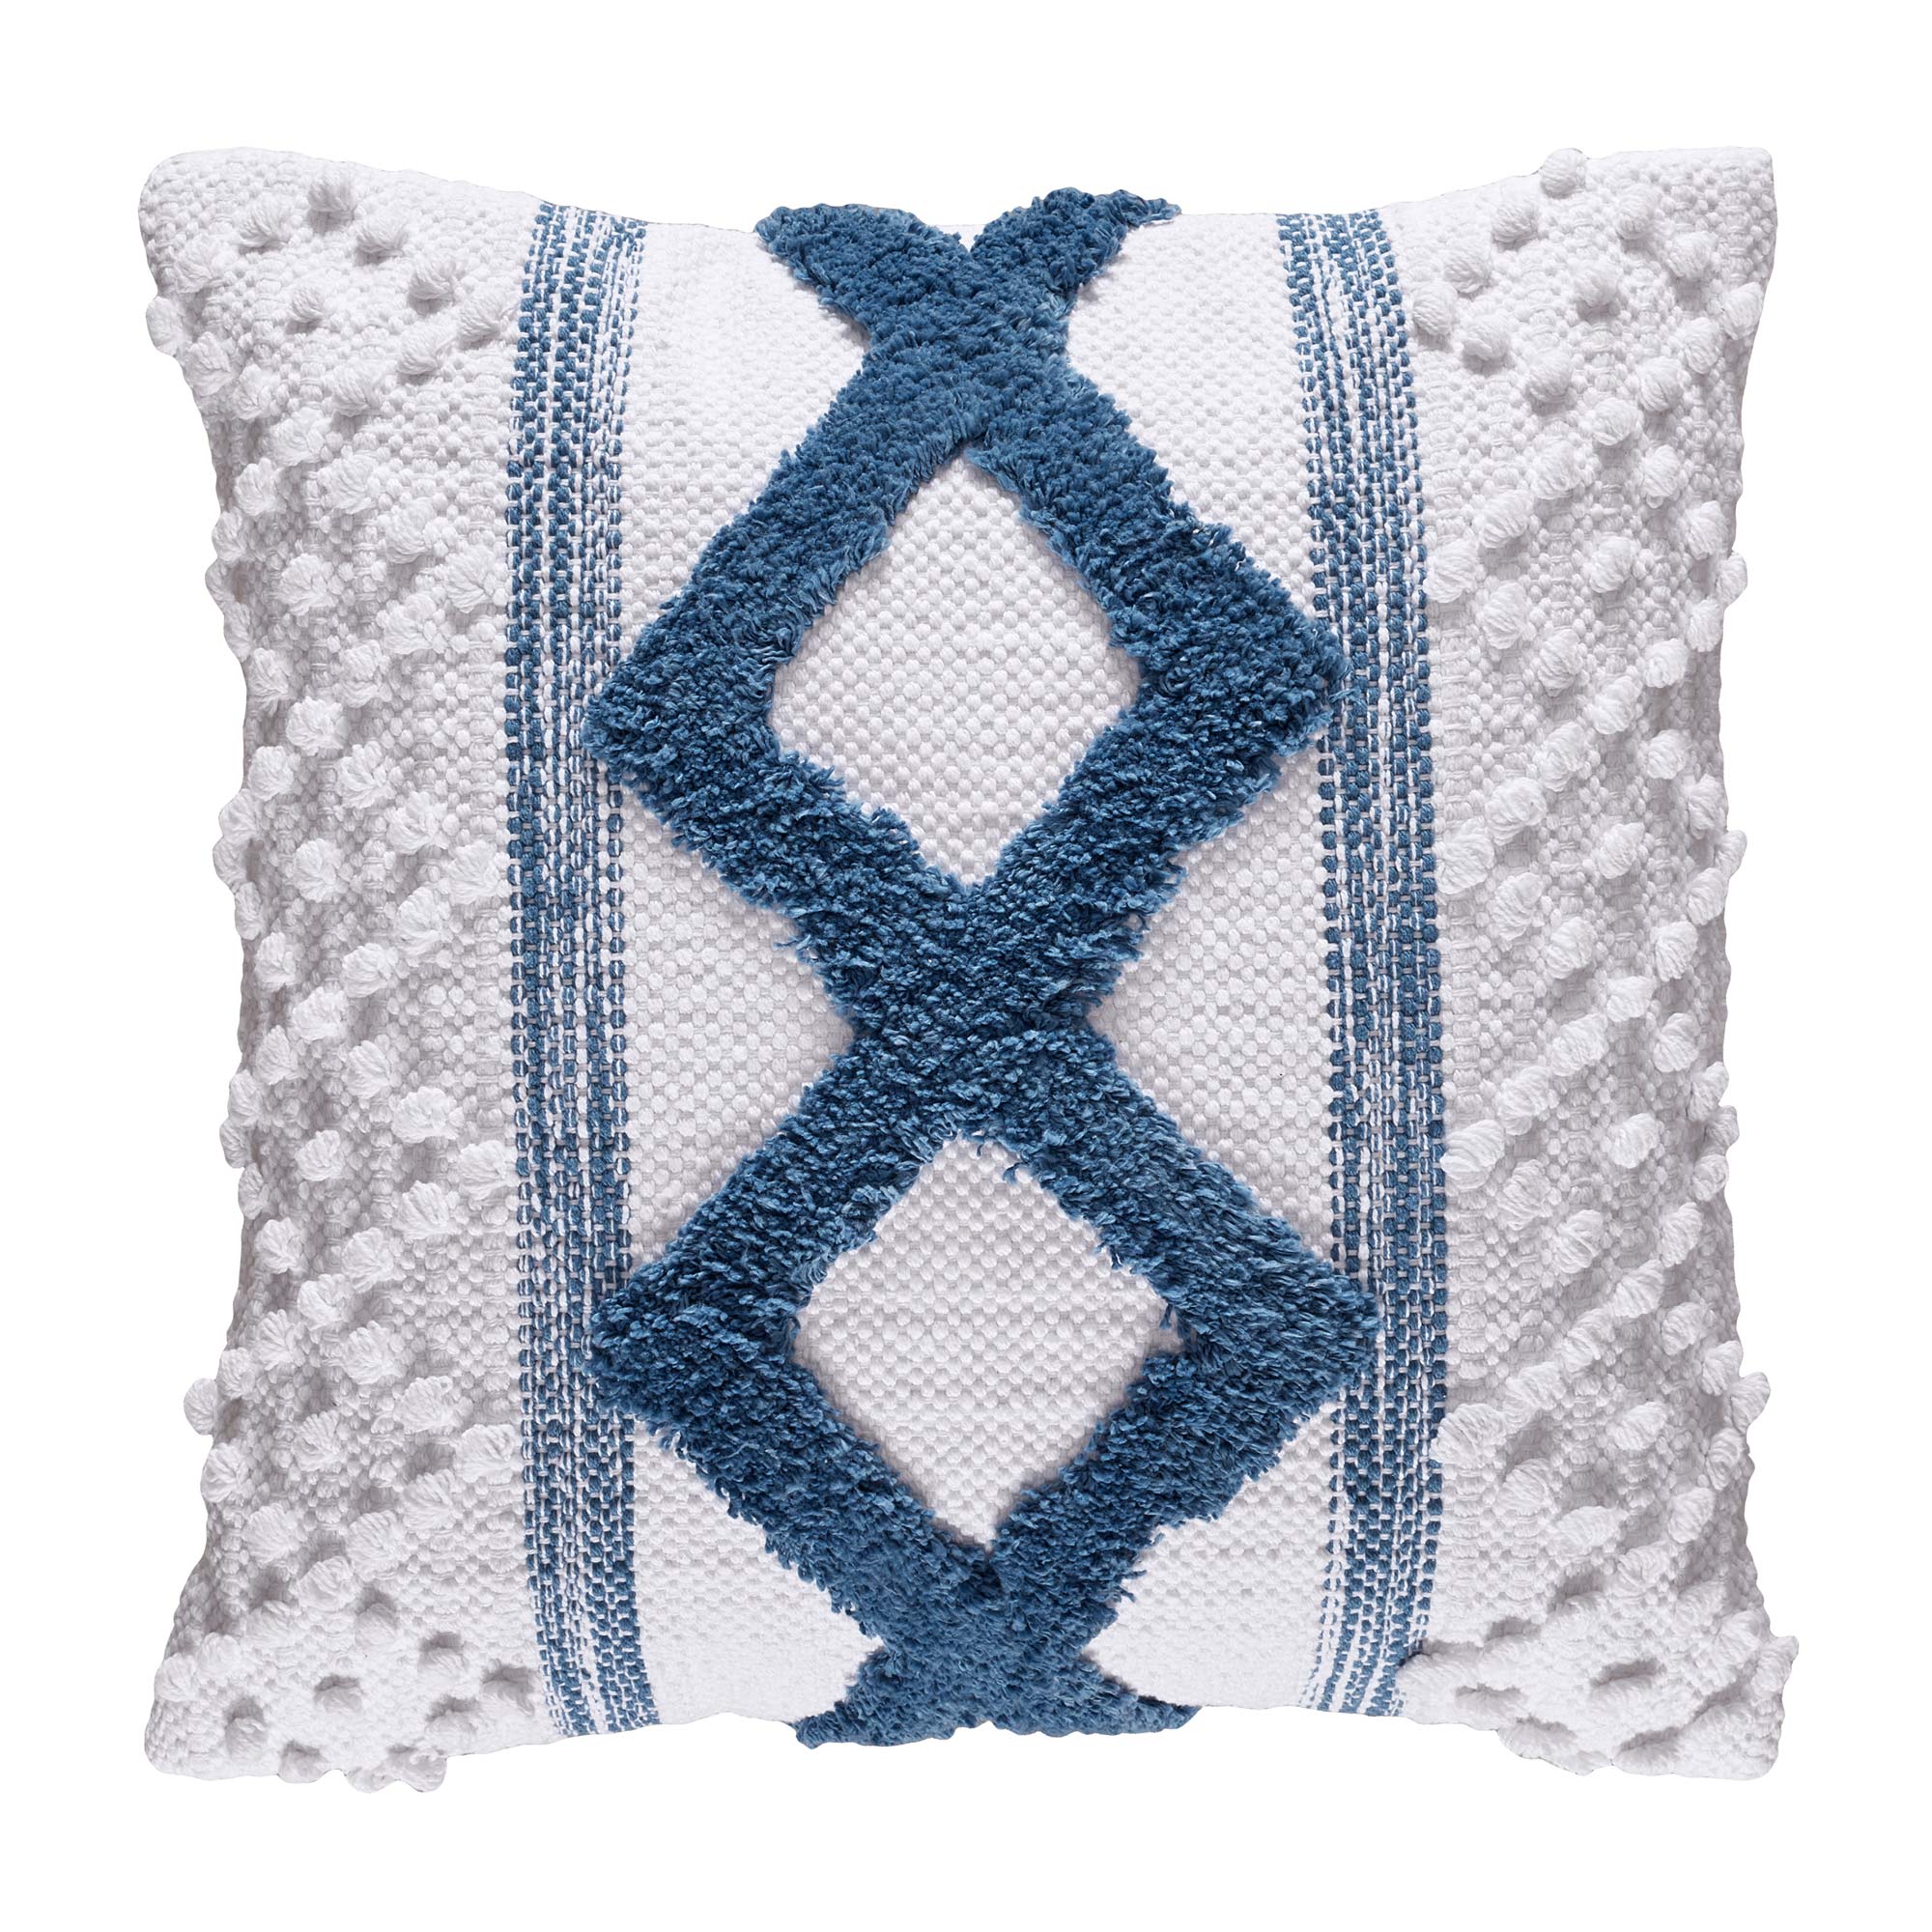 https://www.homethreads.com/files/bedding/serene-pillow-18-square-decorative-throw-pillow-blue-4.jpg